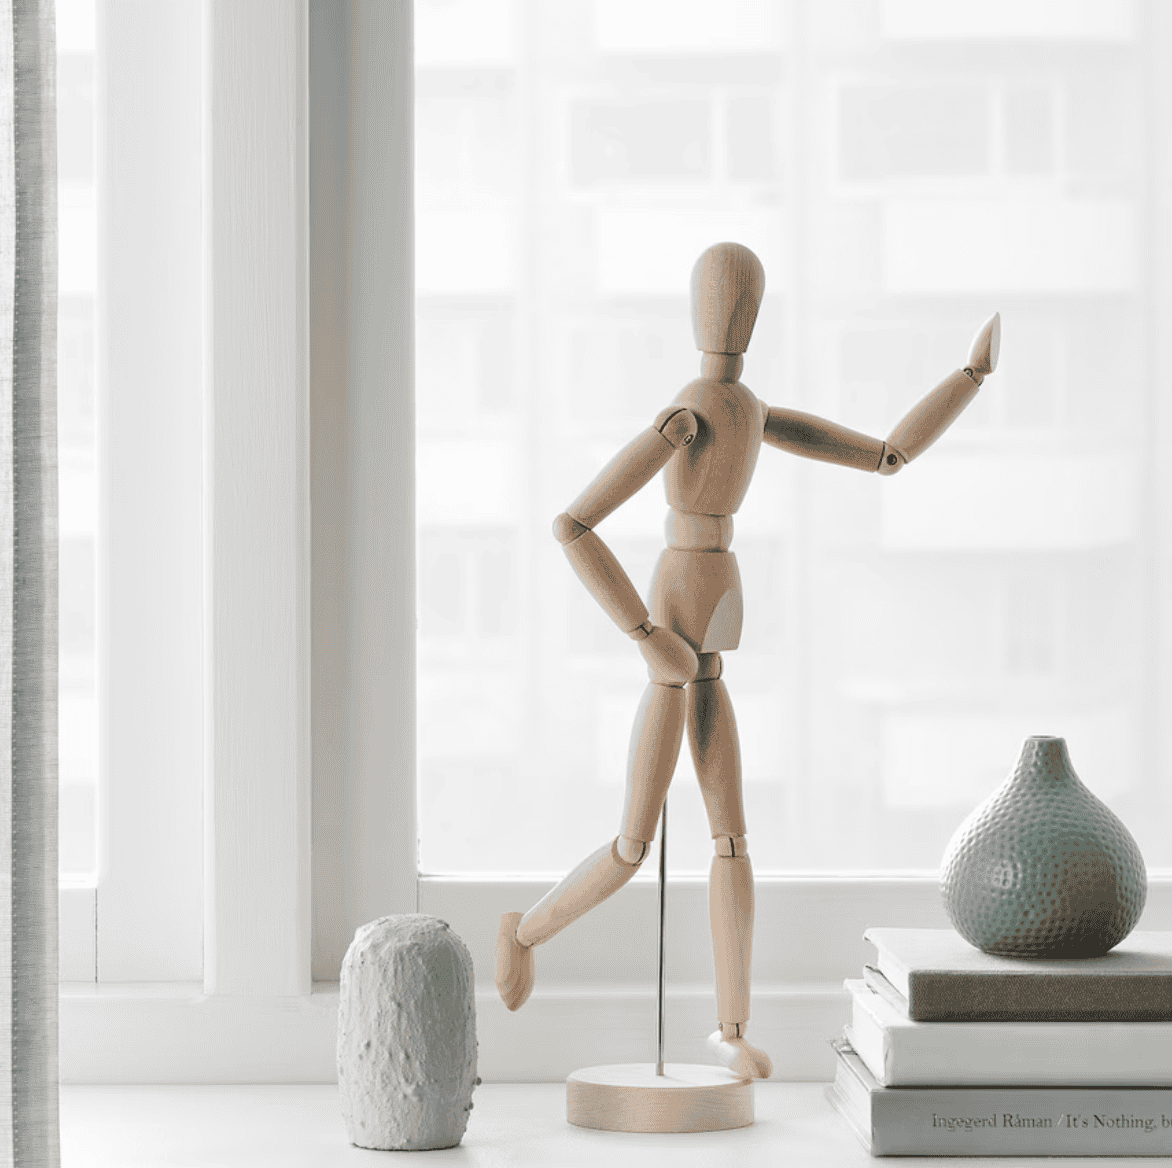 Ideas for that IKEA Gestalta Wooden Artist’s Figure!